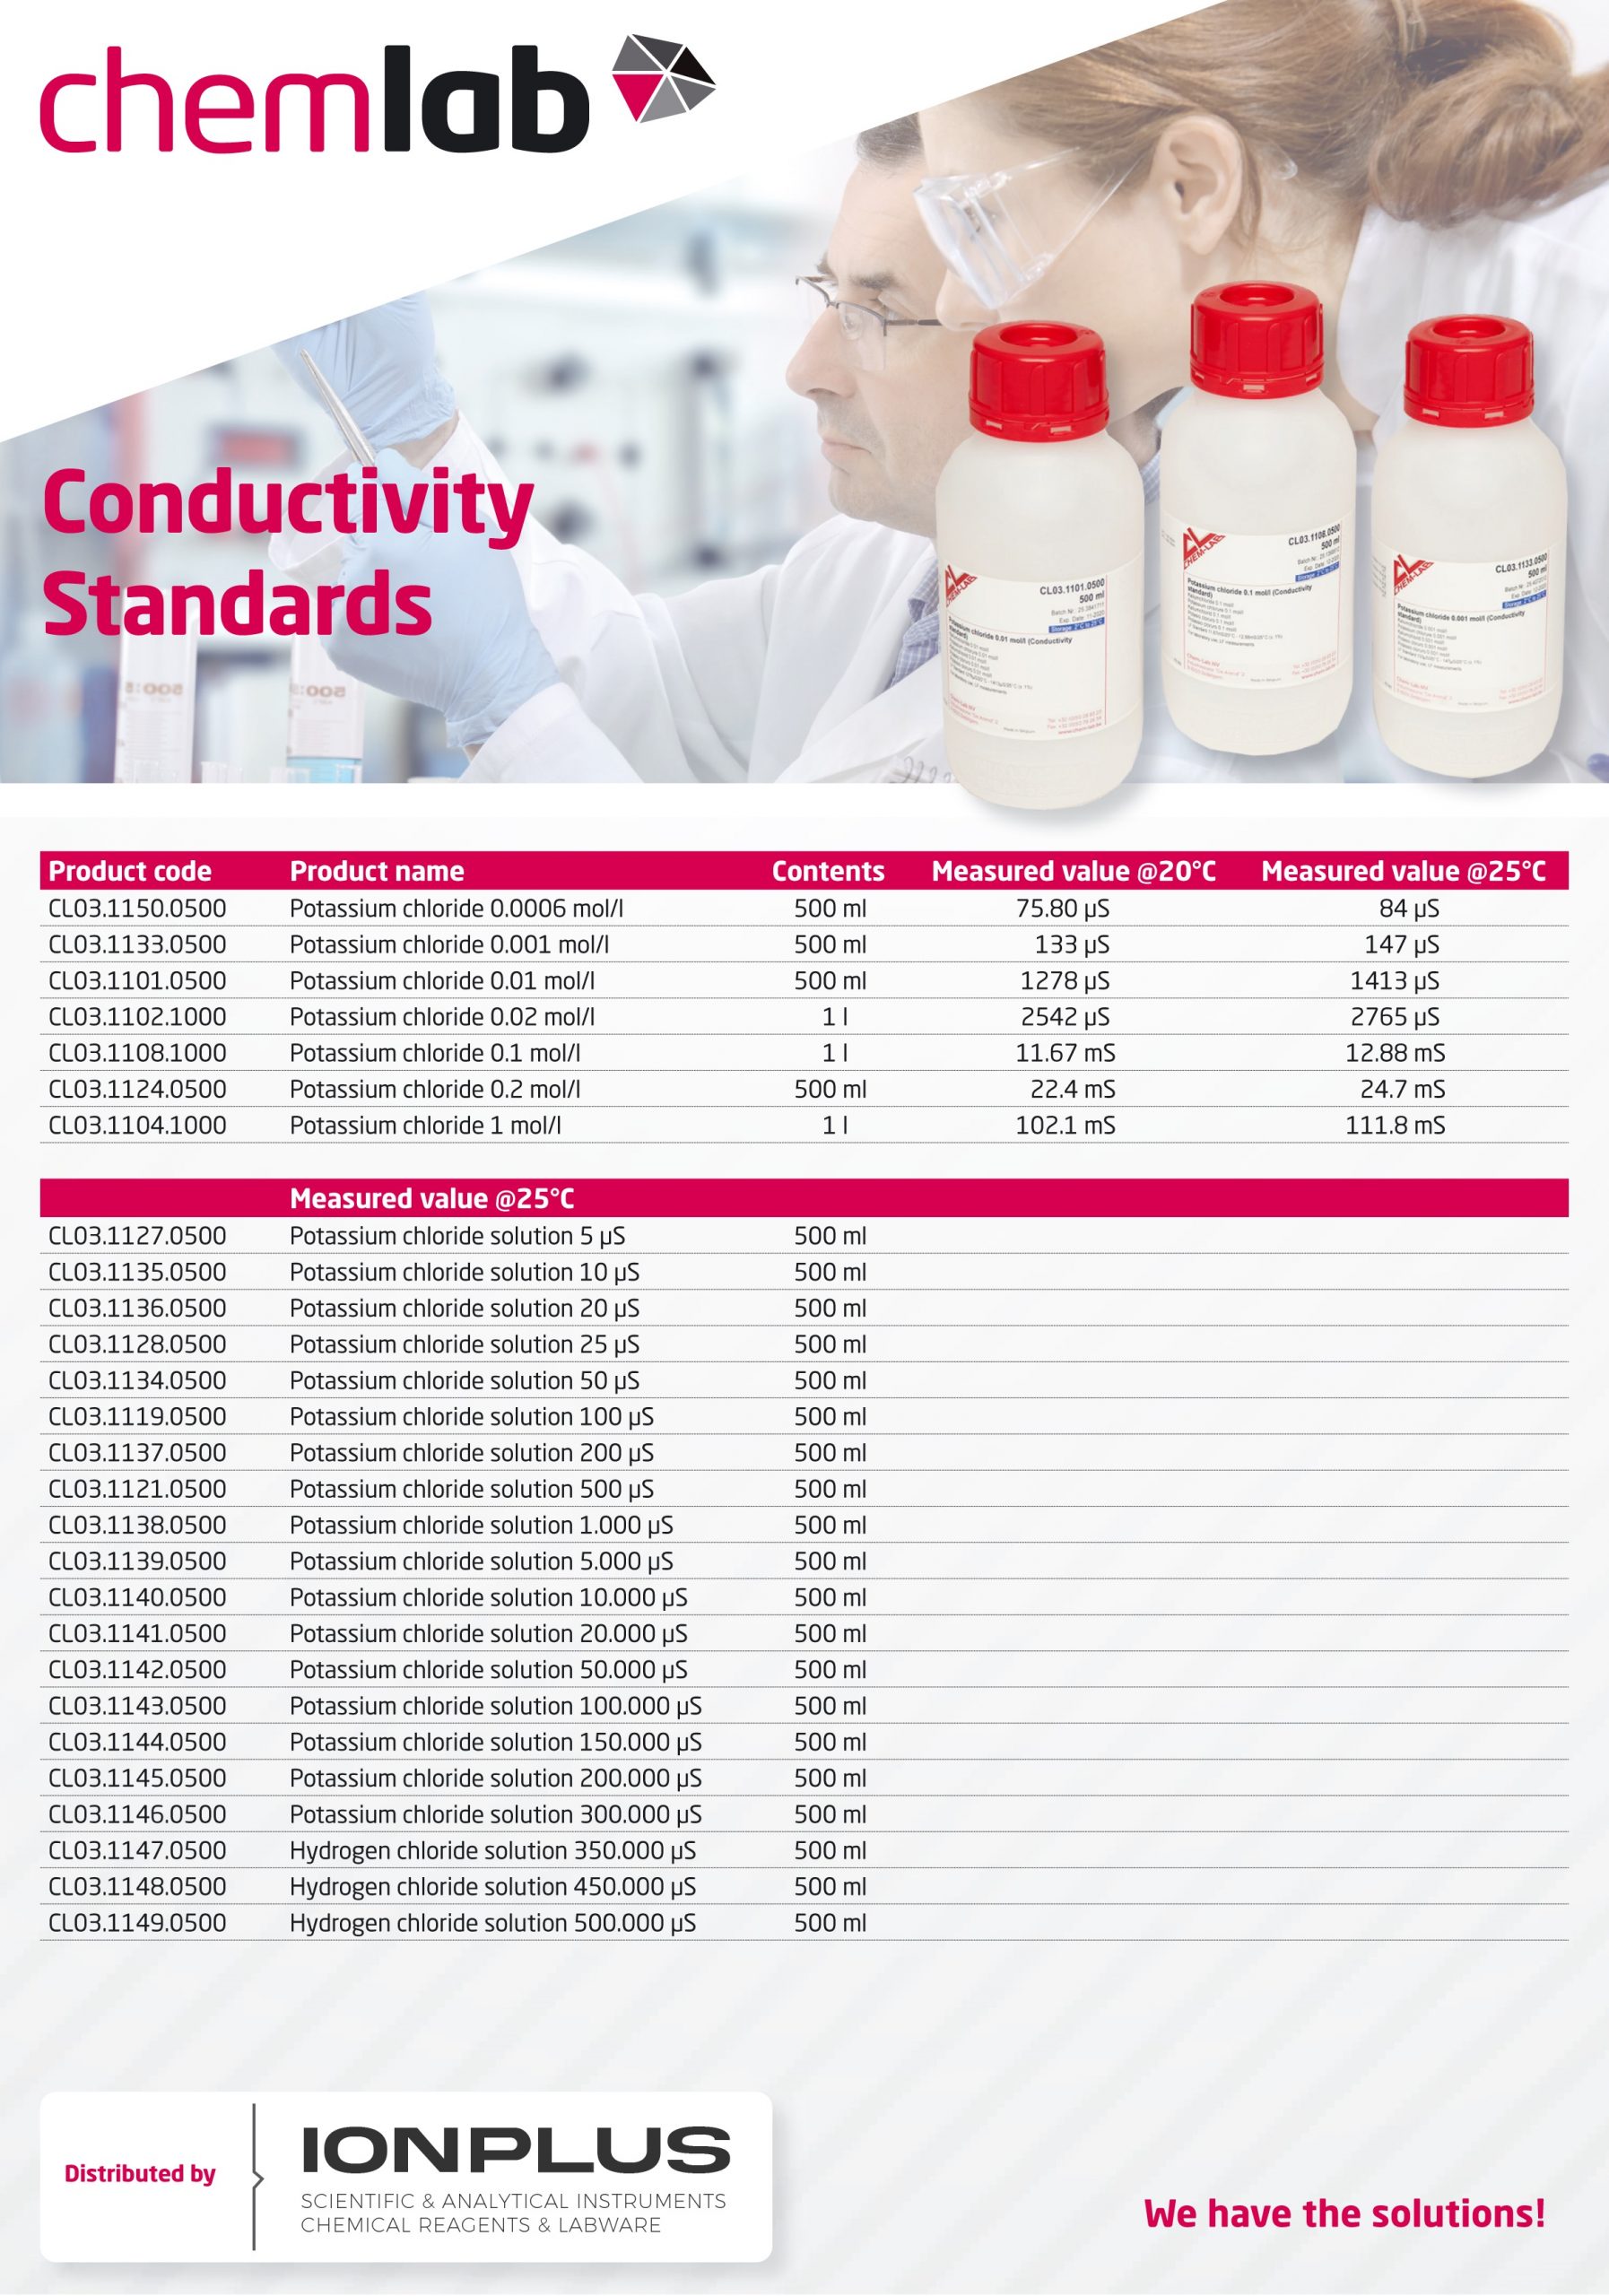 Chemlab Conductivity Standards